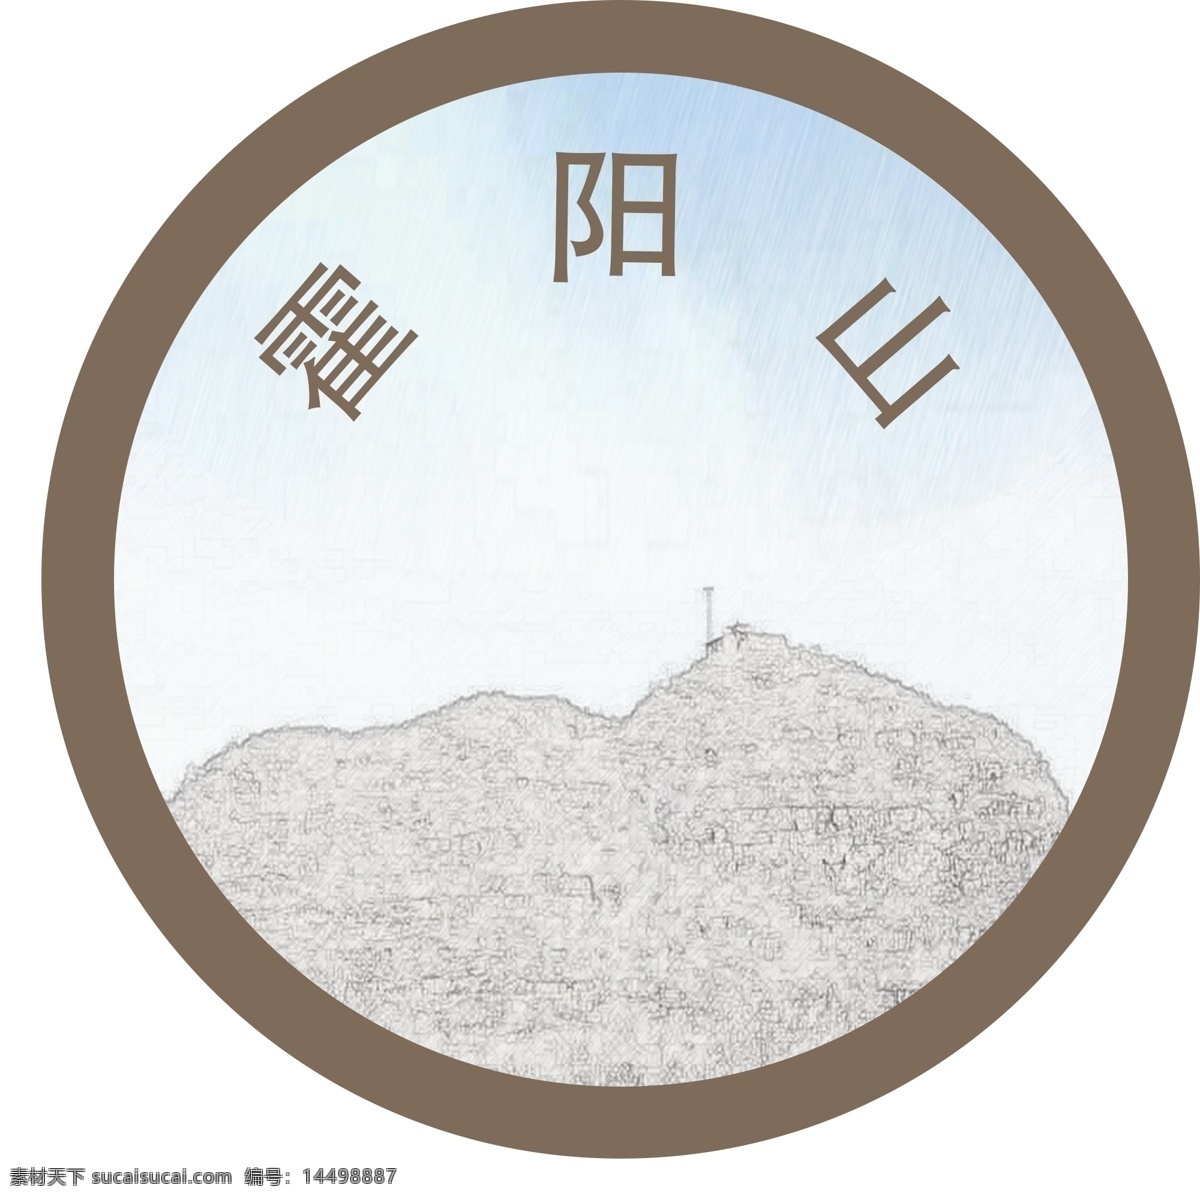 霍 阳山 logo 山峰logo 圆形logo 种植logo 农村养殖